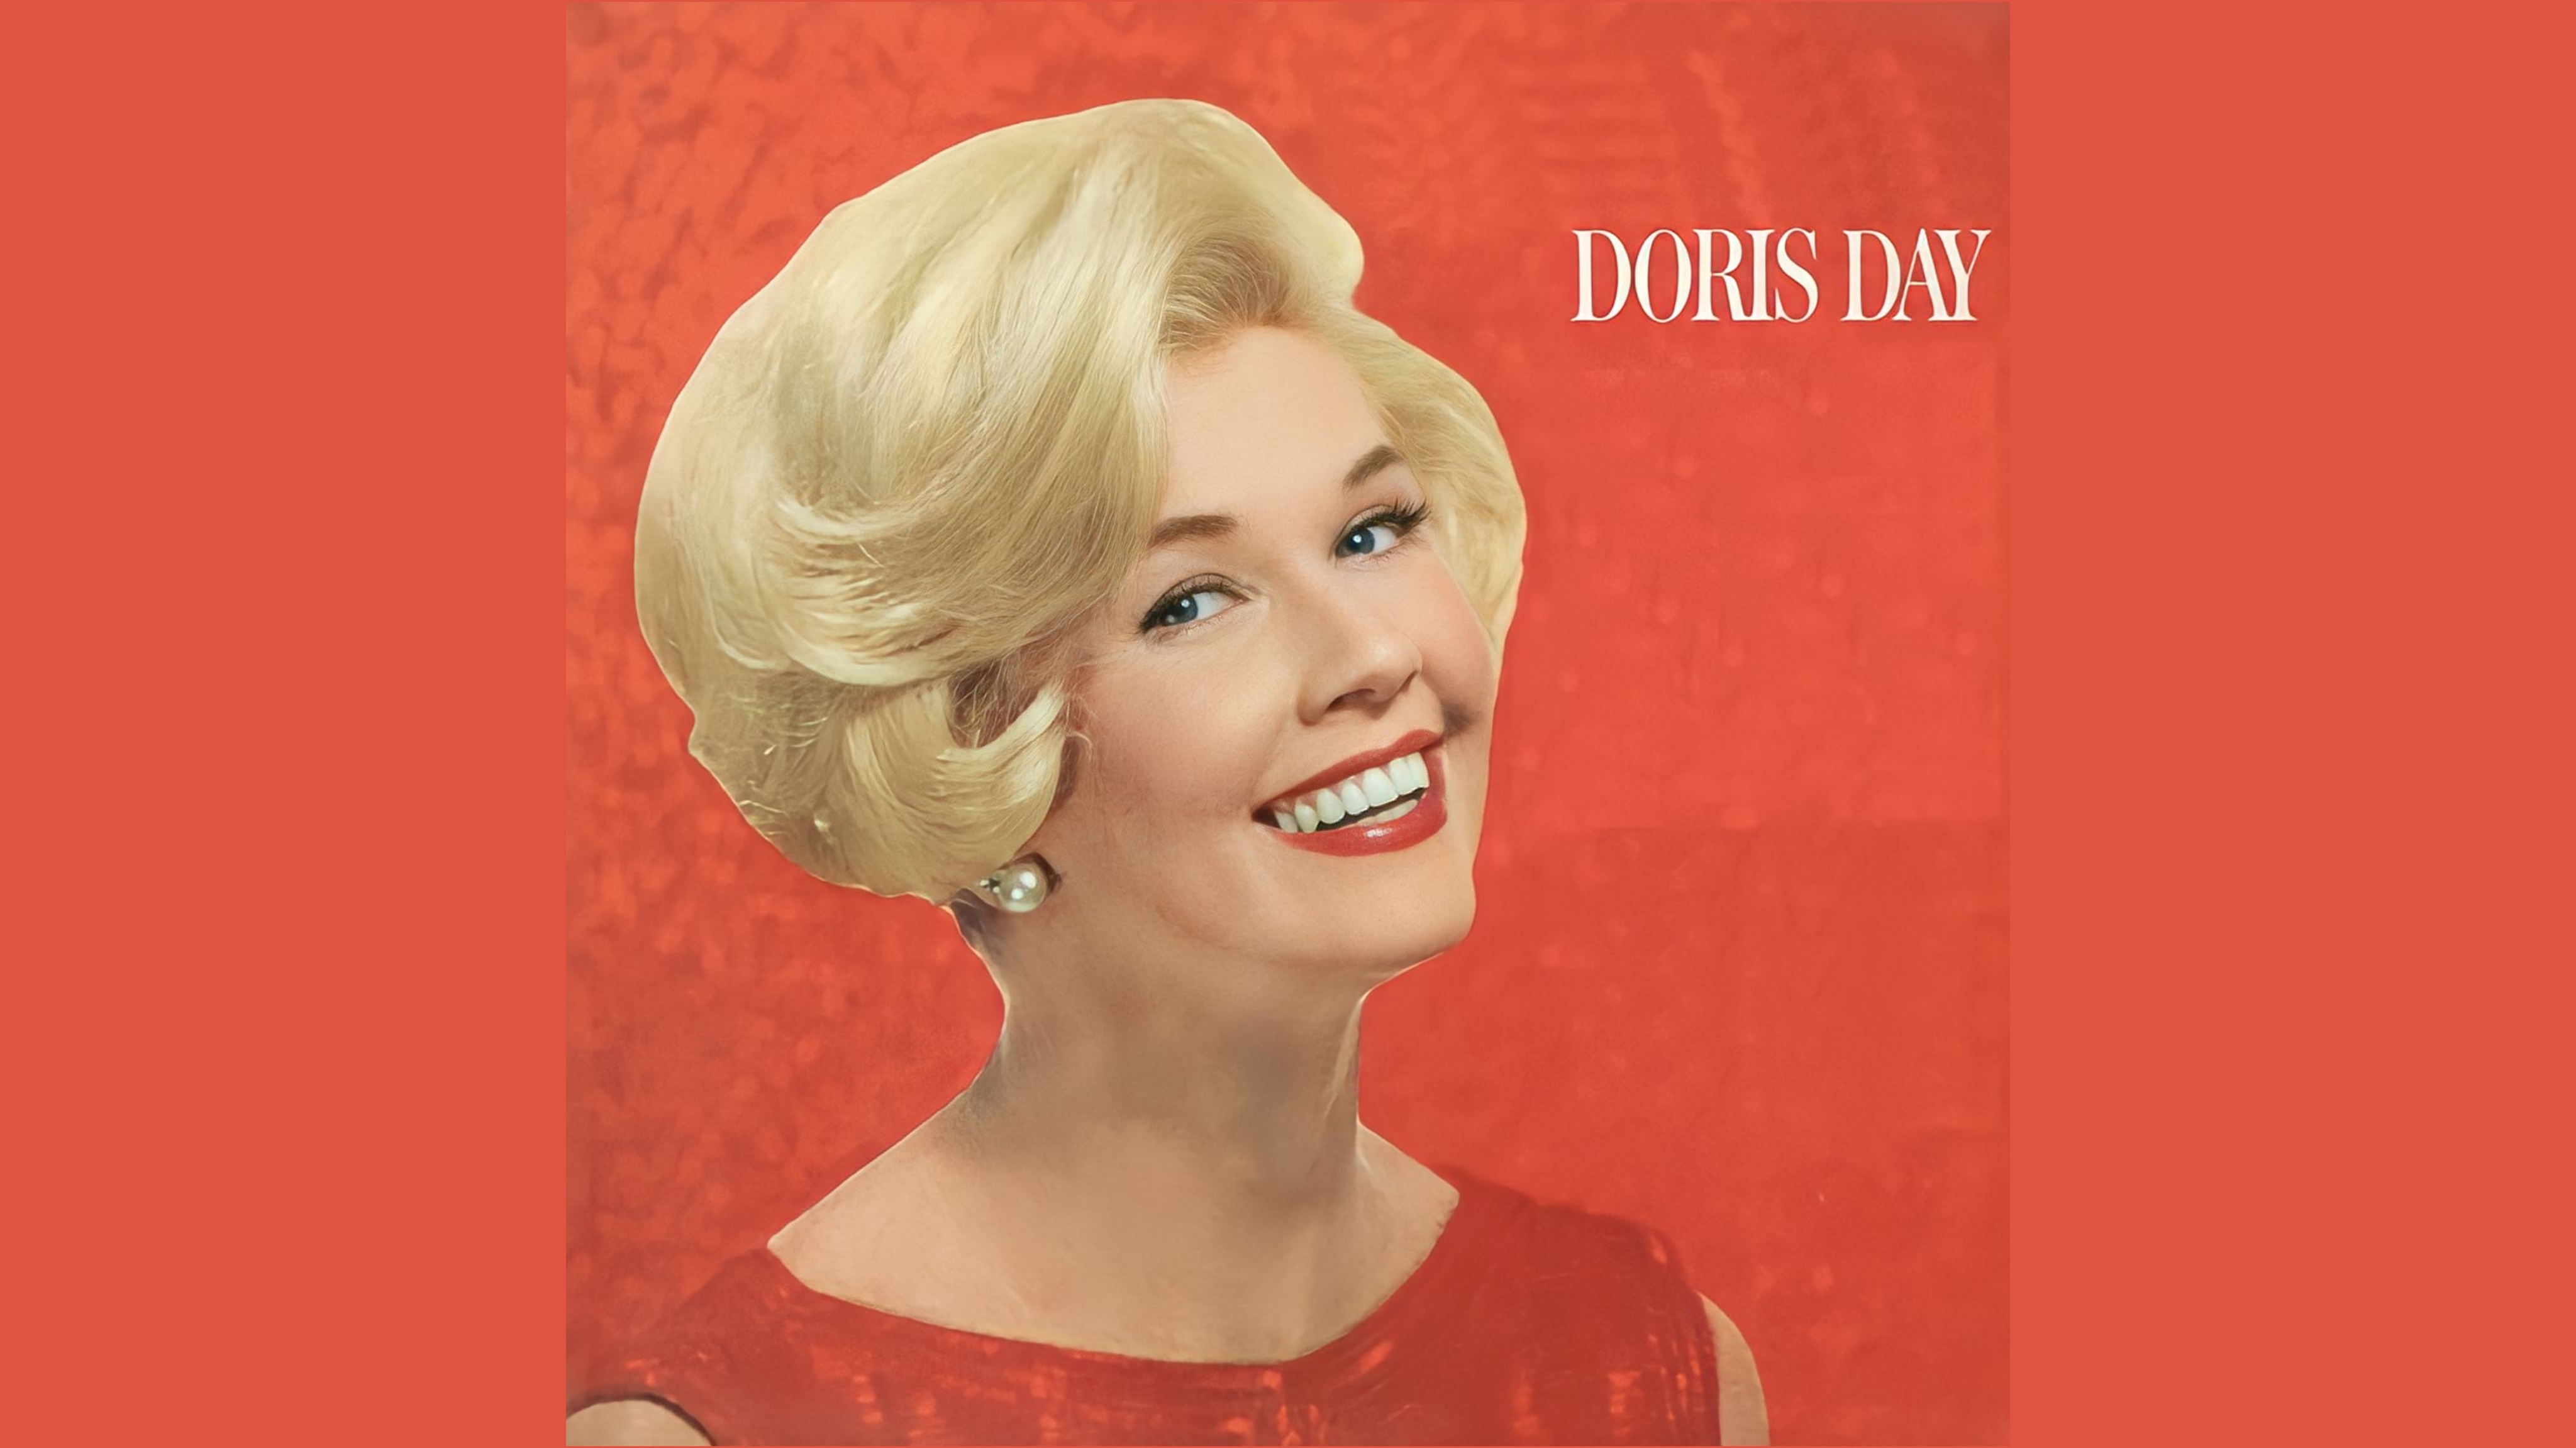 ★Doris Day★
«Everybody Loves a Lover»
Retro / On vinyl